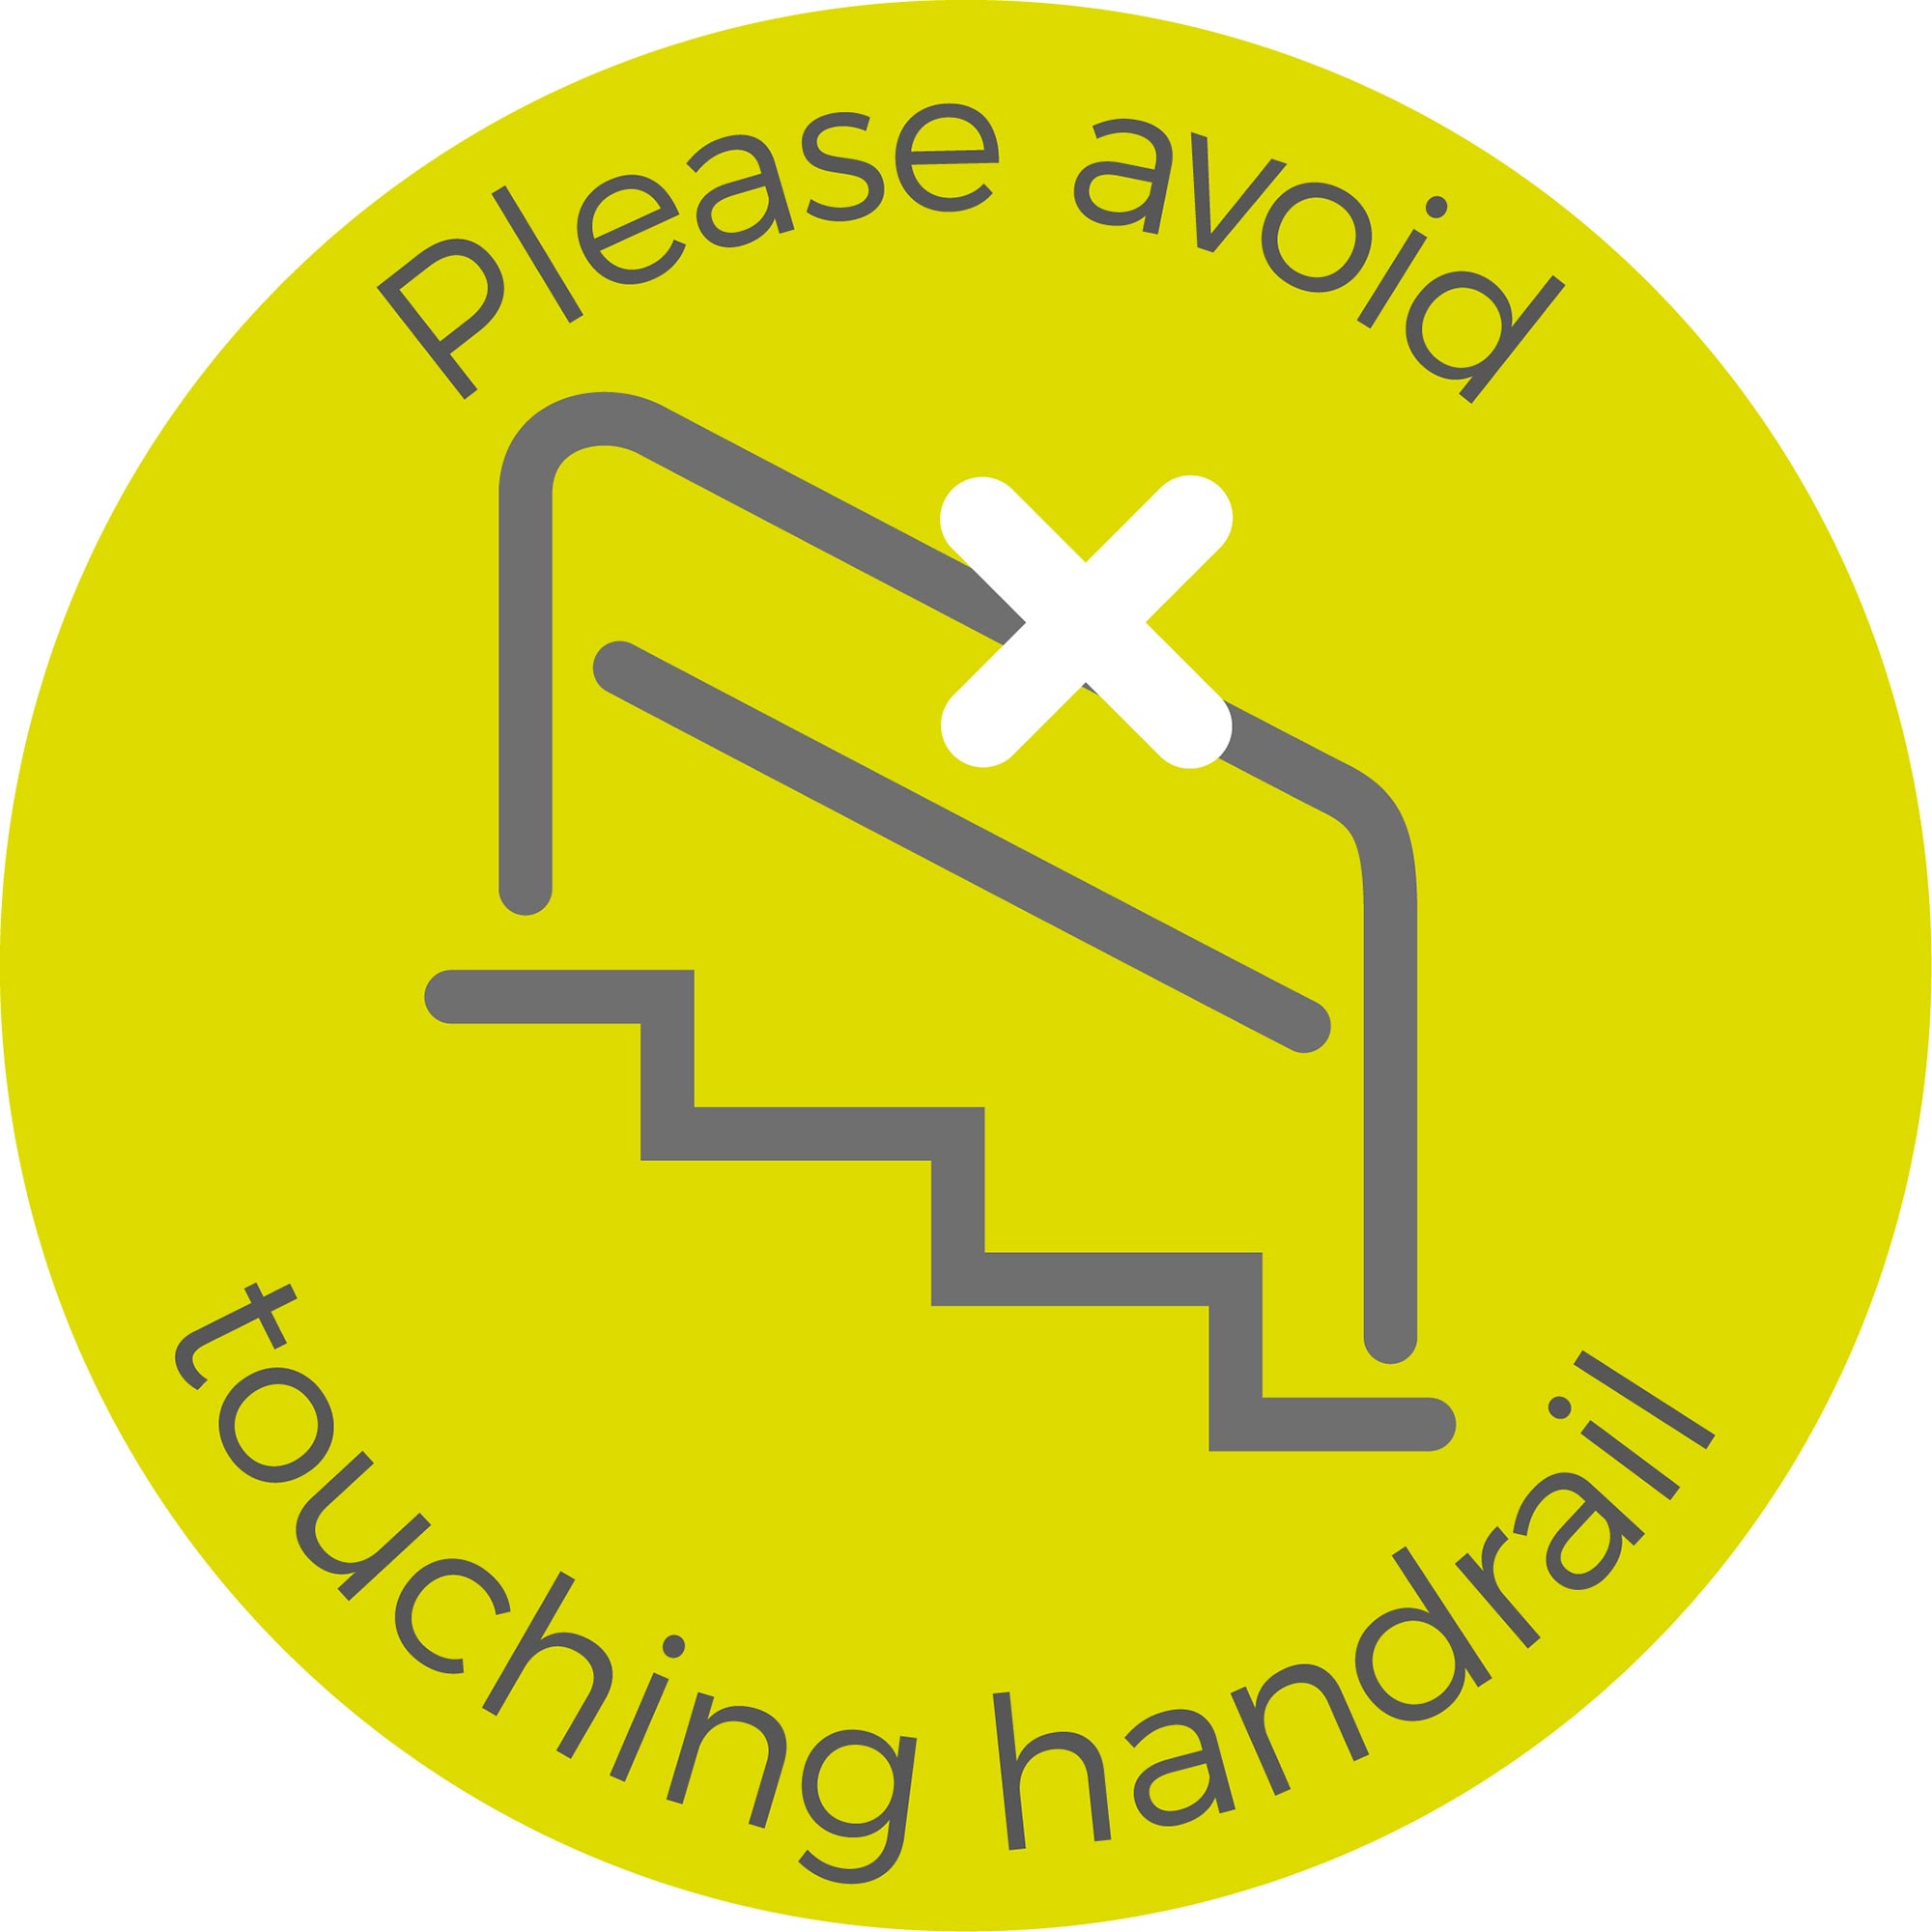 Avoid Touching Handrails - Green Sticker